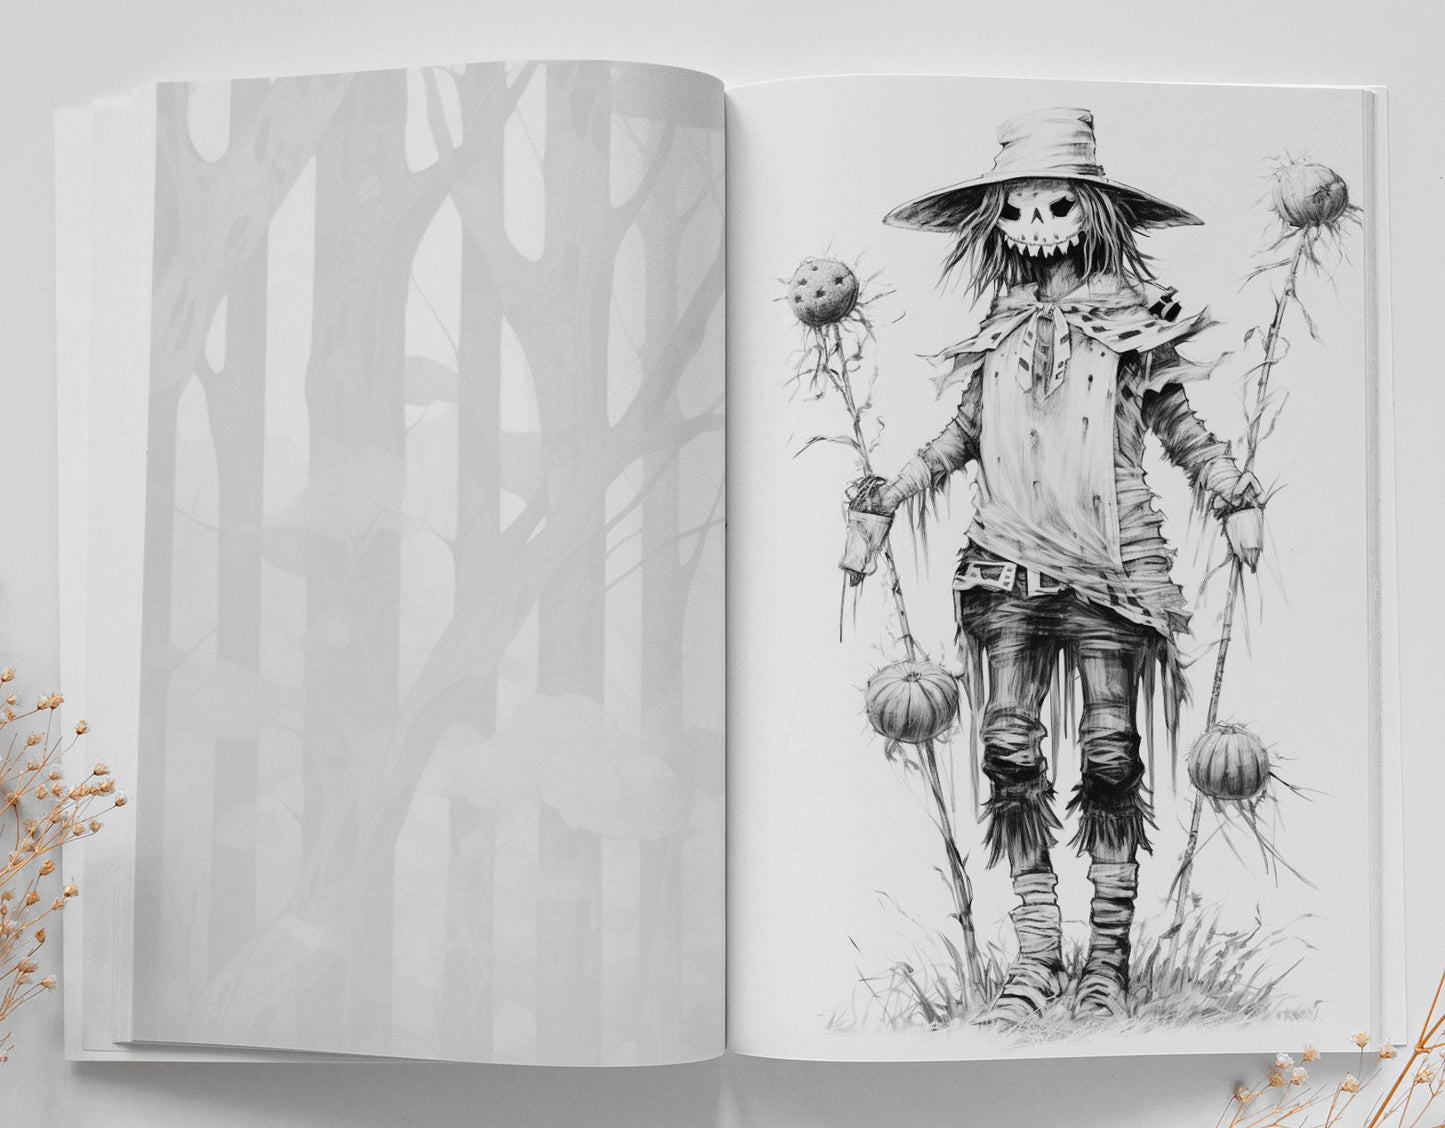 Scarecrows Halloween Coloring Book (Digital) - Monsoon Publishing USA